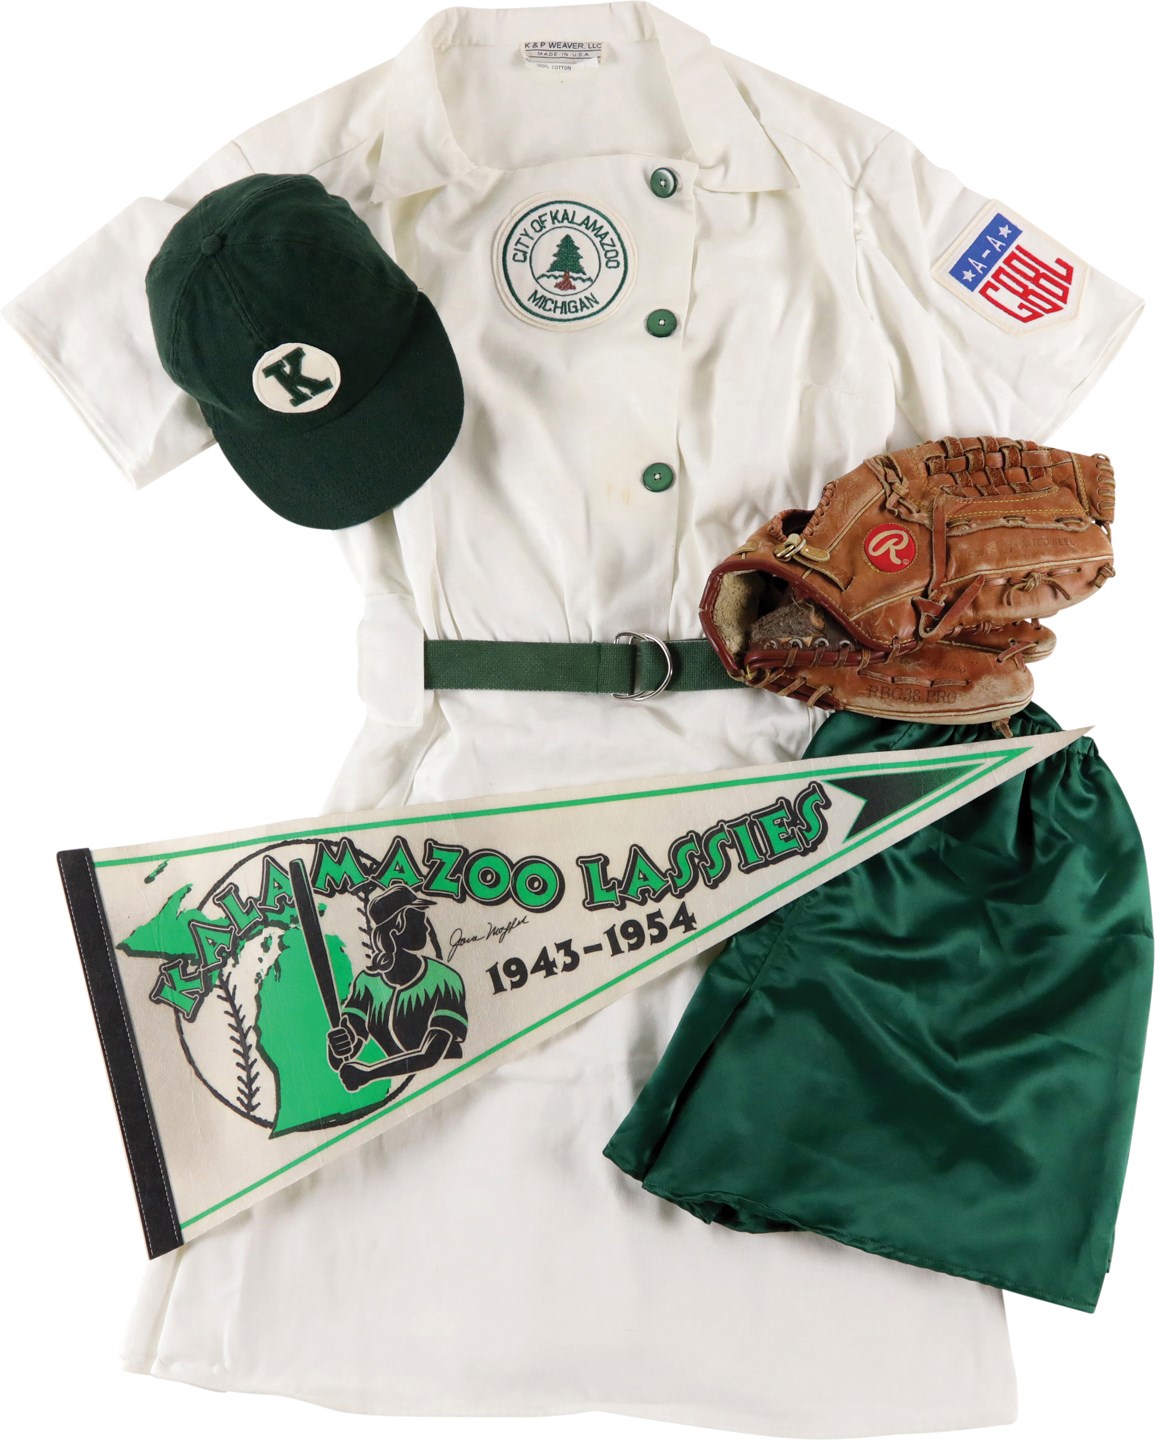 - 1951-52 Kalamazoo Lassies AAGPL Jane Moffet Replica Tour Uniform Plus Related Material